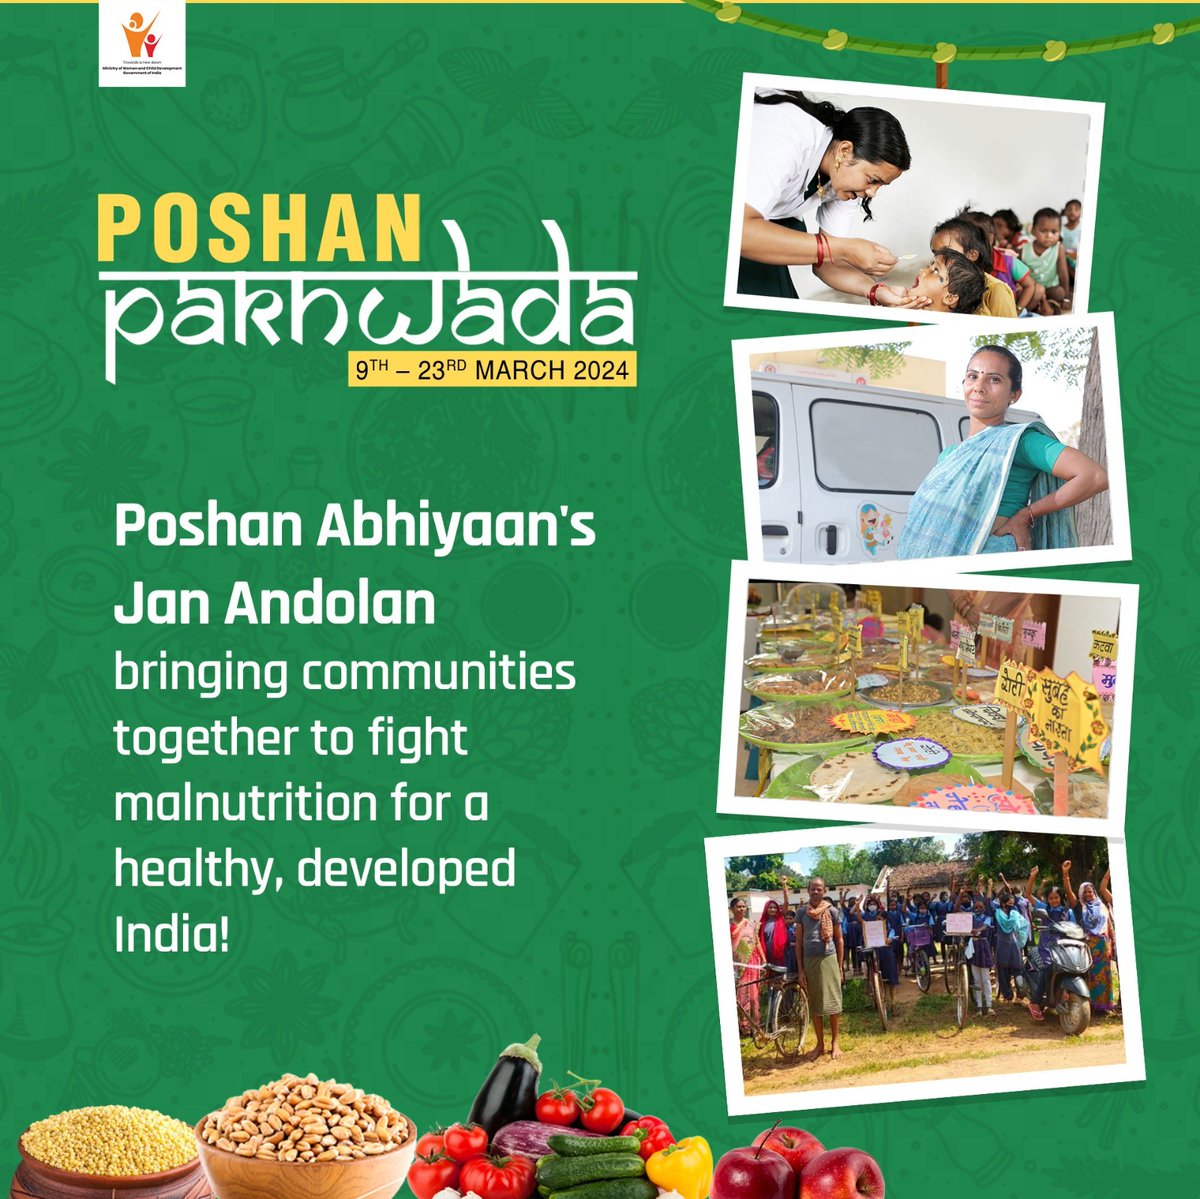 Jan Andolans by amplifying Jan Bhagidari is a key pillar of Poshan Abhiyaan which is celebrated annually in the form of Poshan Pakhwada and Poshan Maah since the launch of POSHAN Abhiyaan in 2018. 
.
.
#पोषणकामहत्व
#poshanpakhwada2024 #पोषणपखवाड़ा #NutritionForAll
@pibwcd